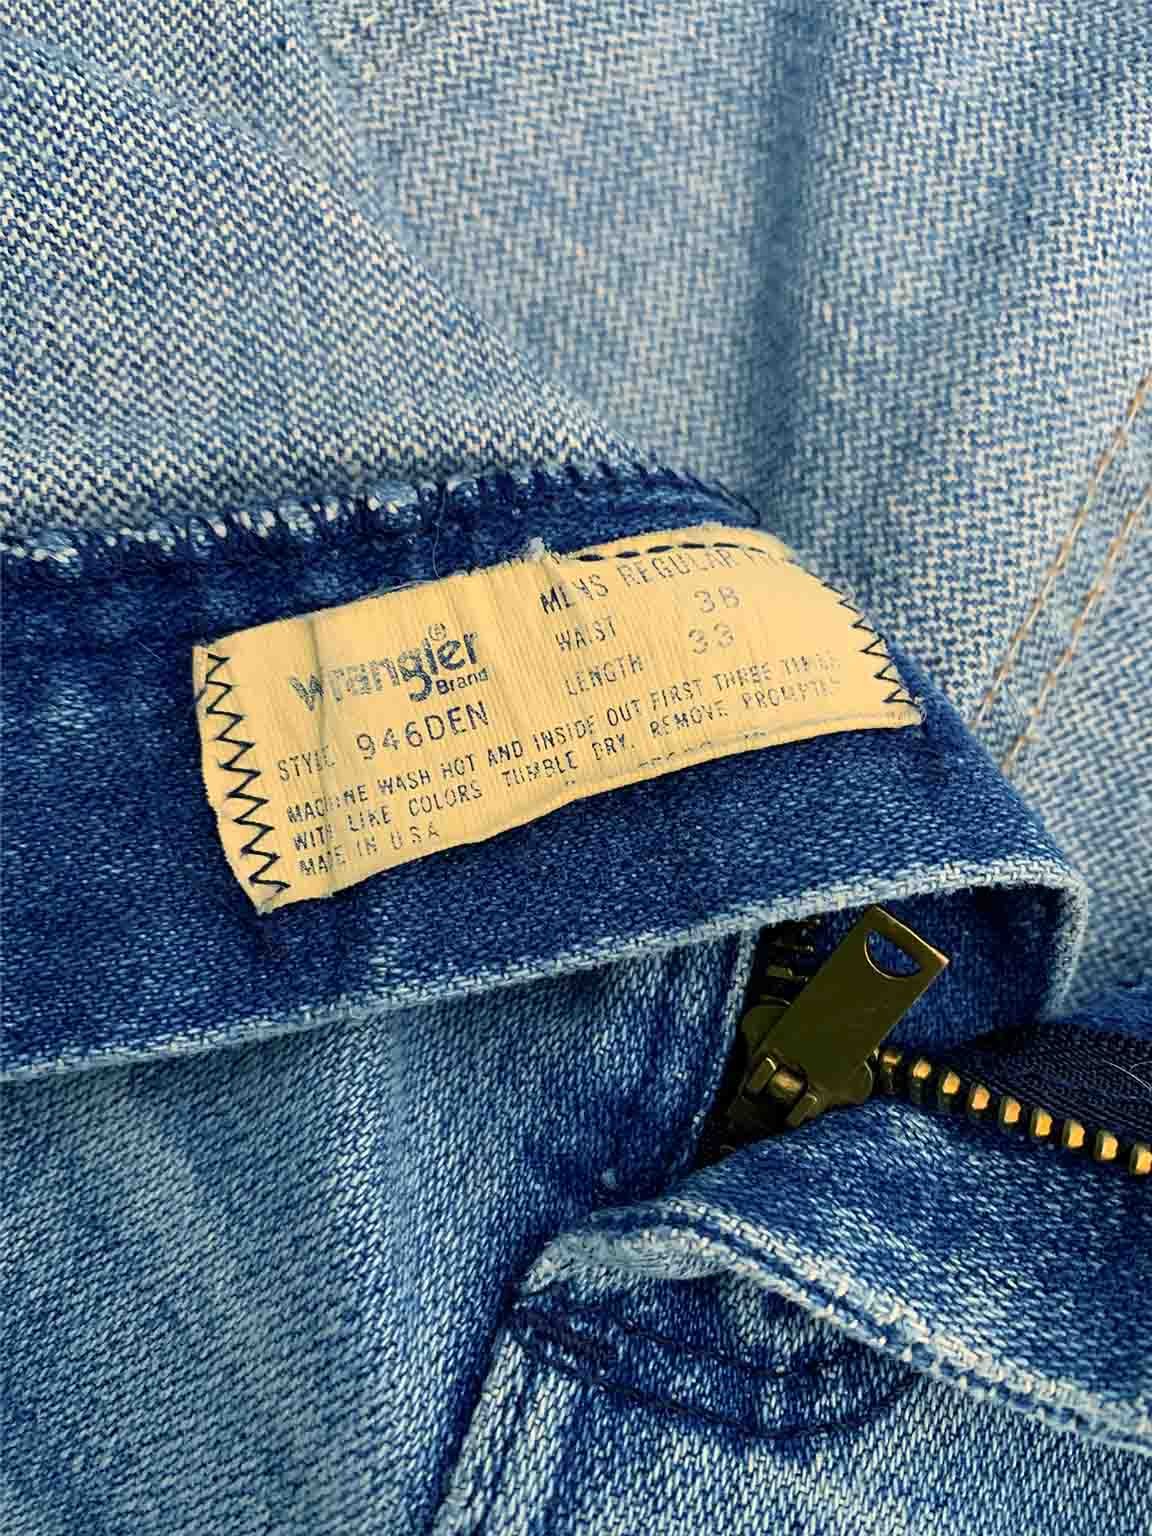 NISH | Wrangler Jeans - Made in USA - 38x33